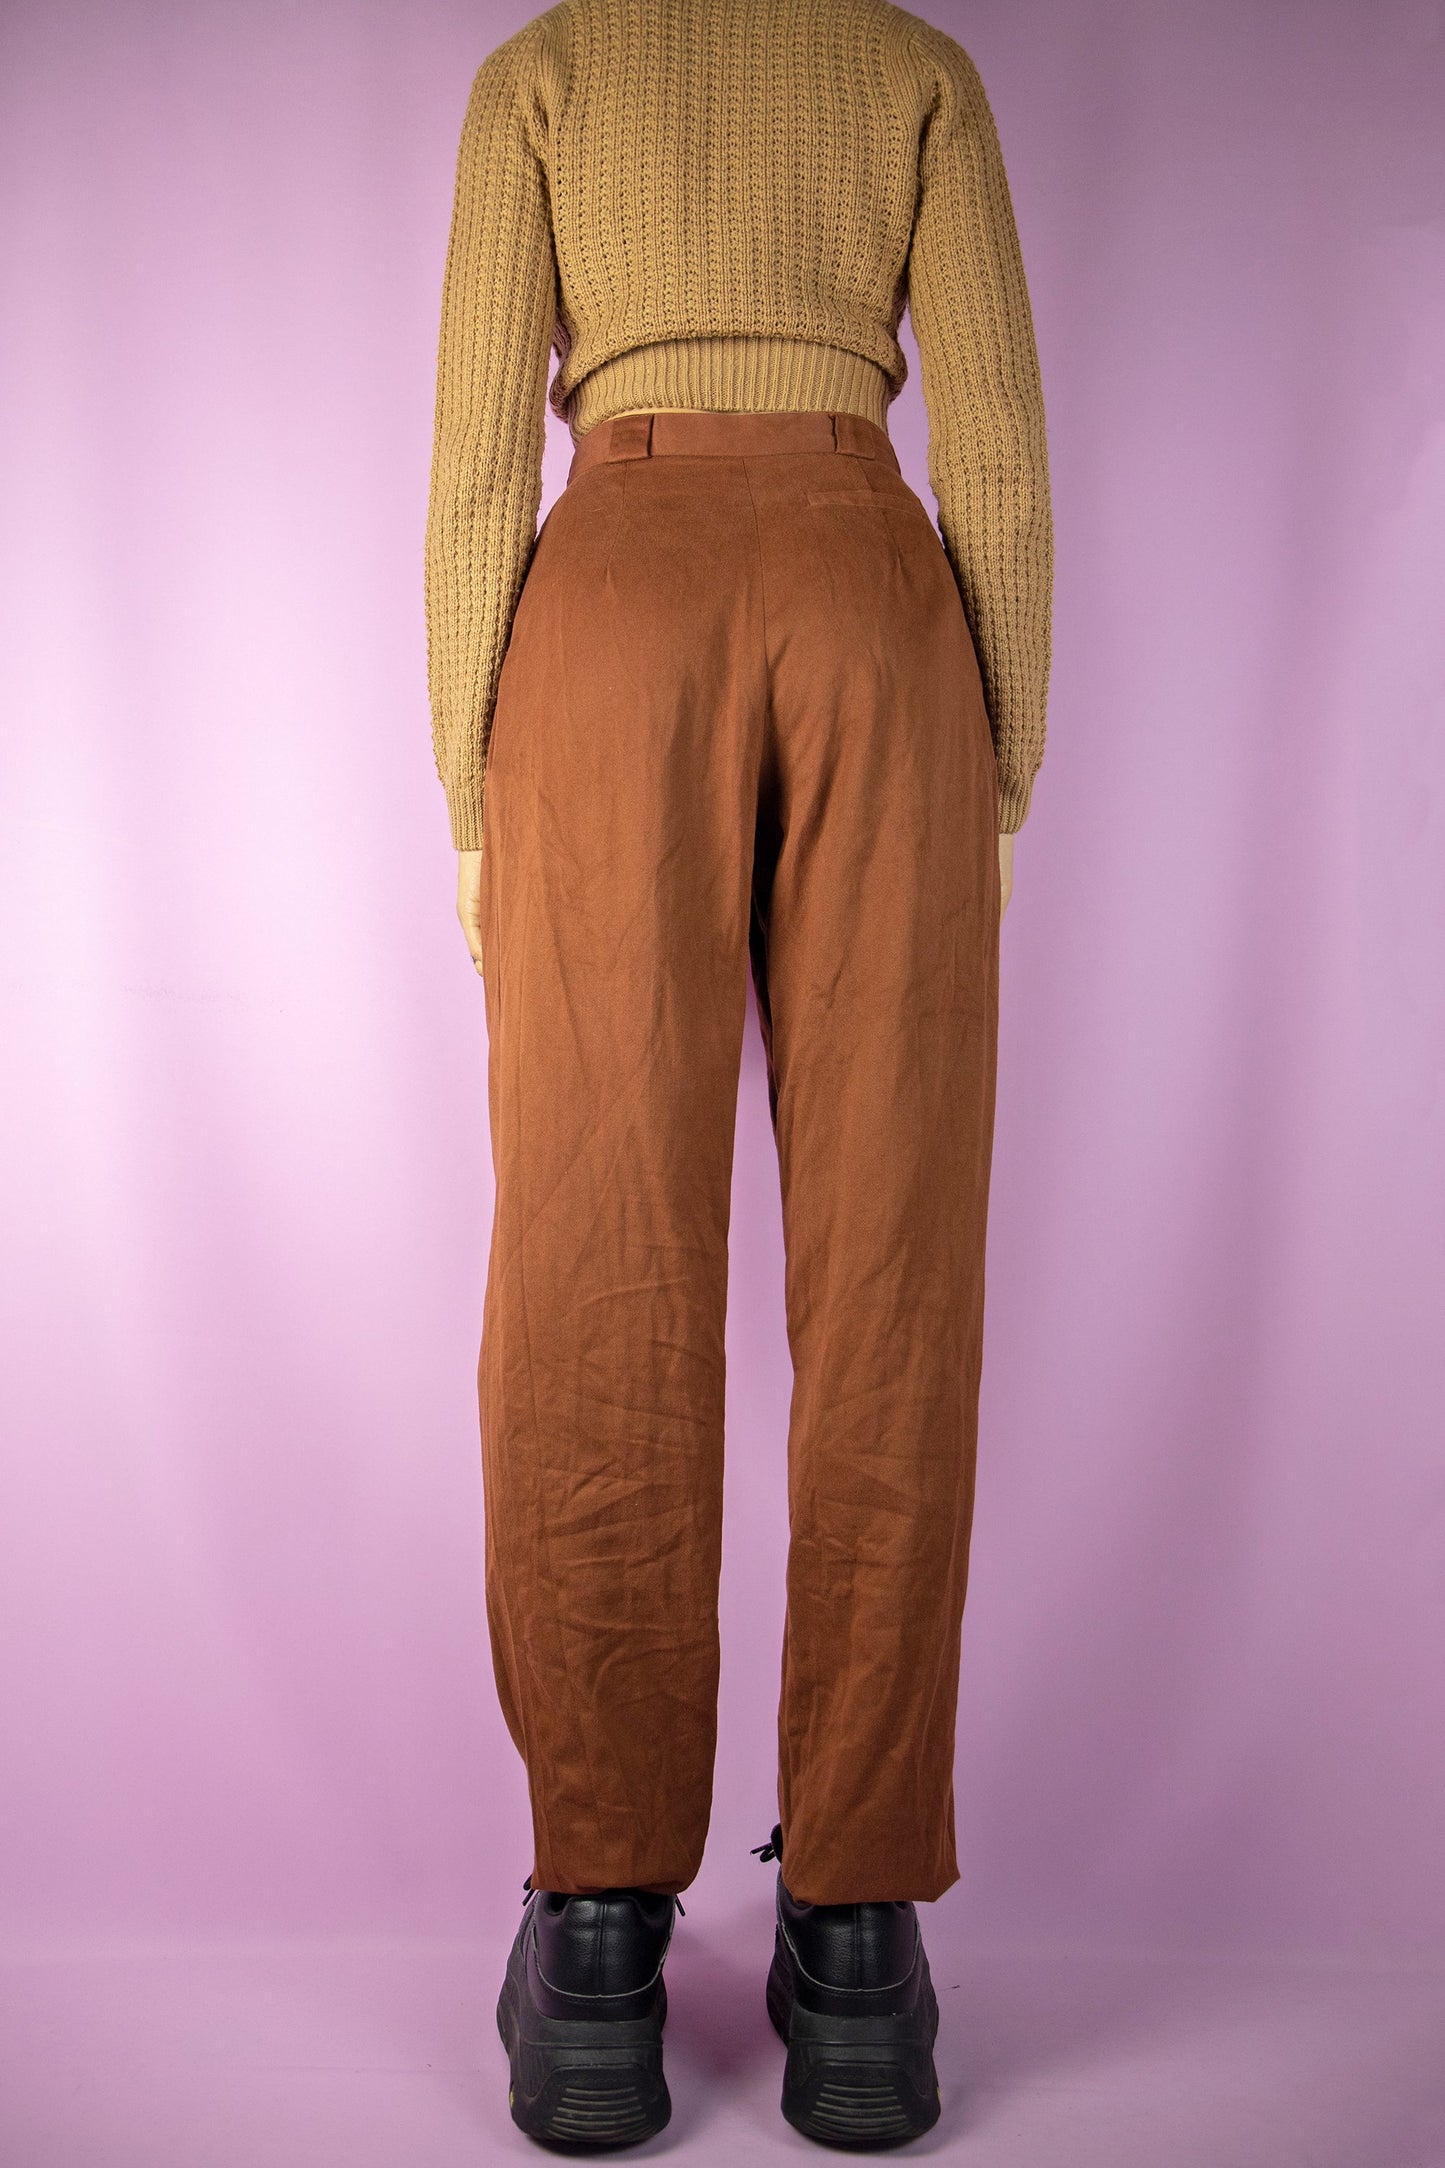 Vintage 90's Brown Carrot Pants - S/M